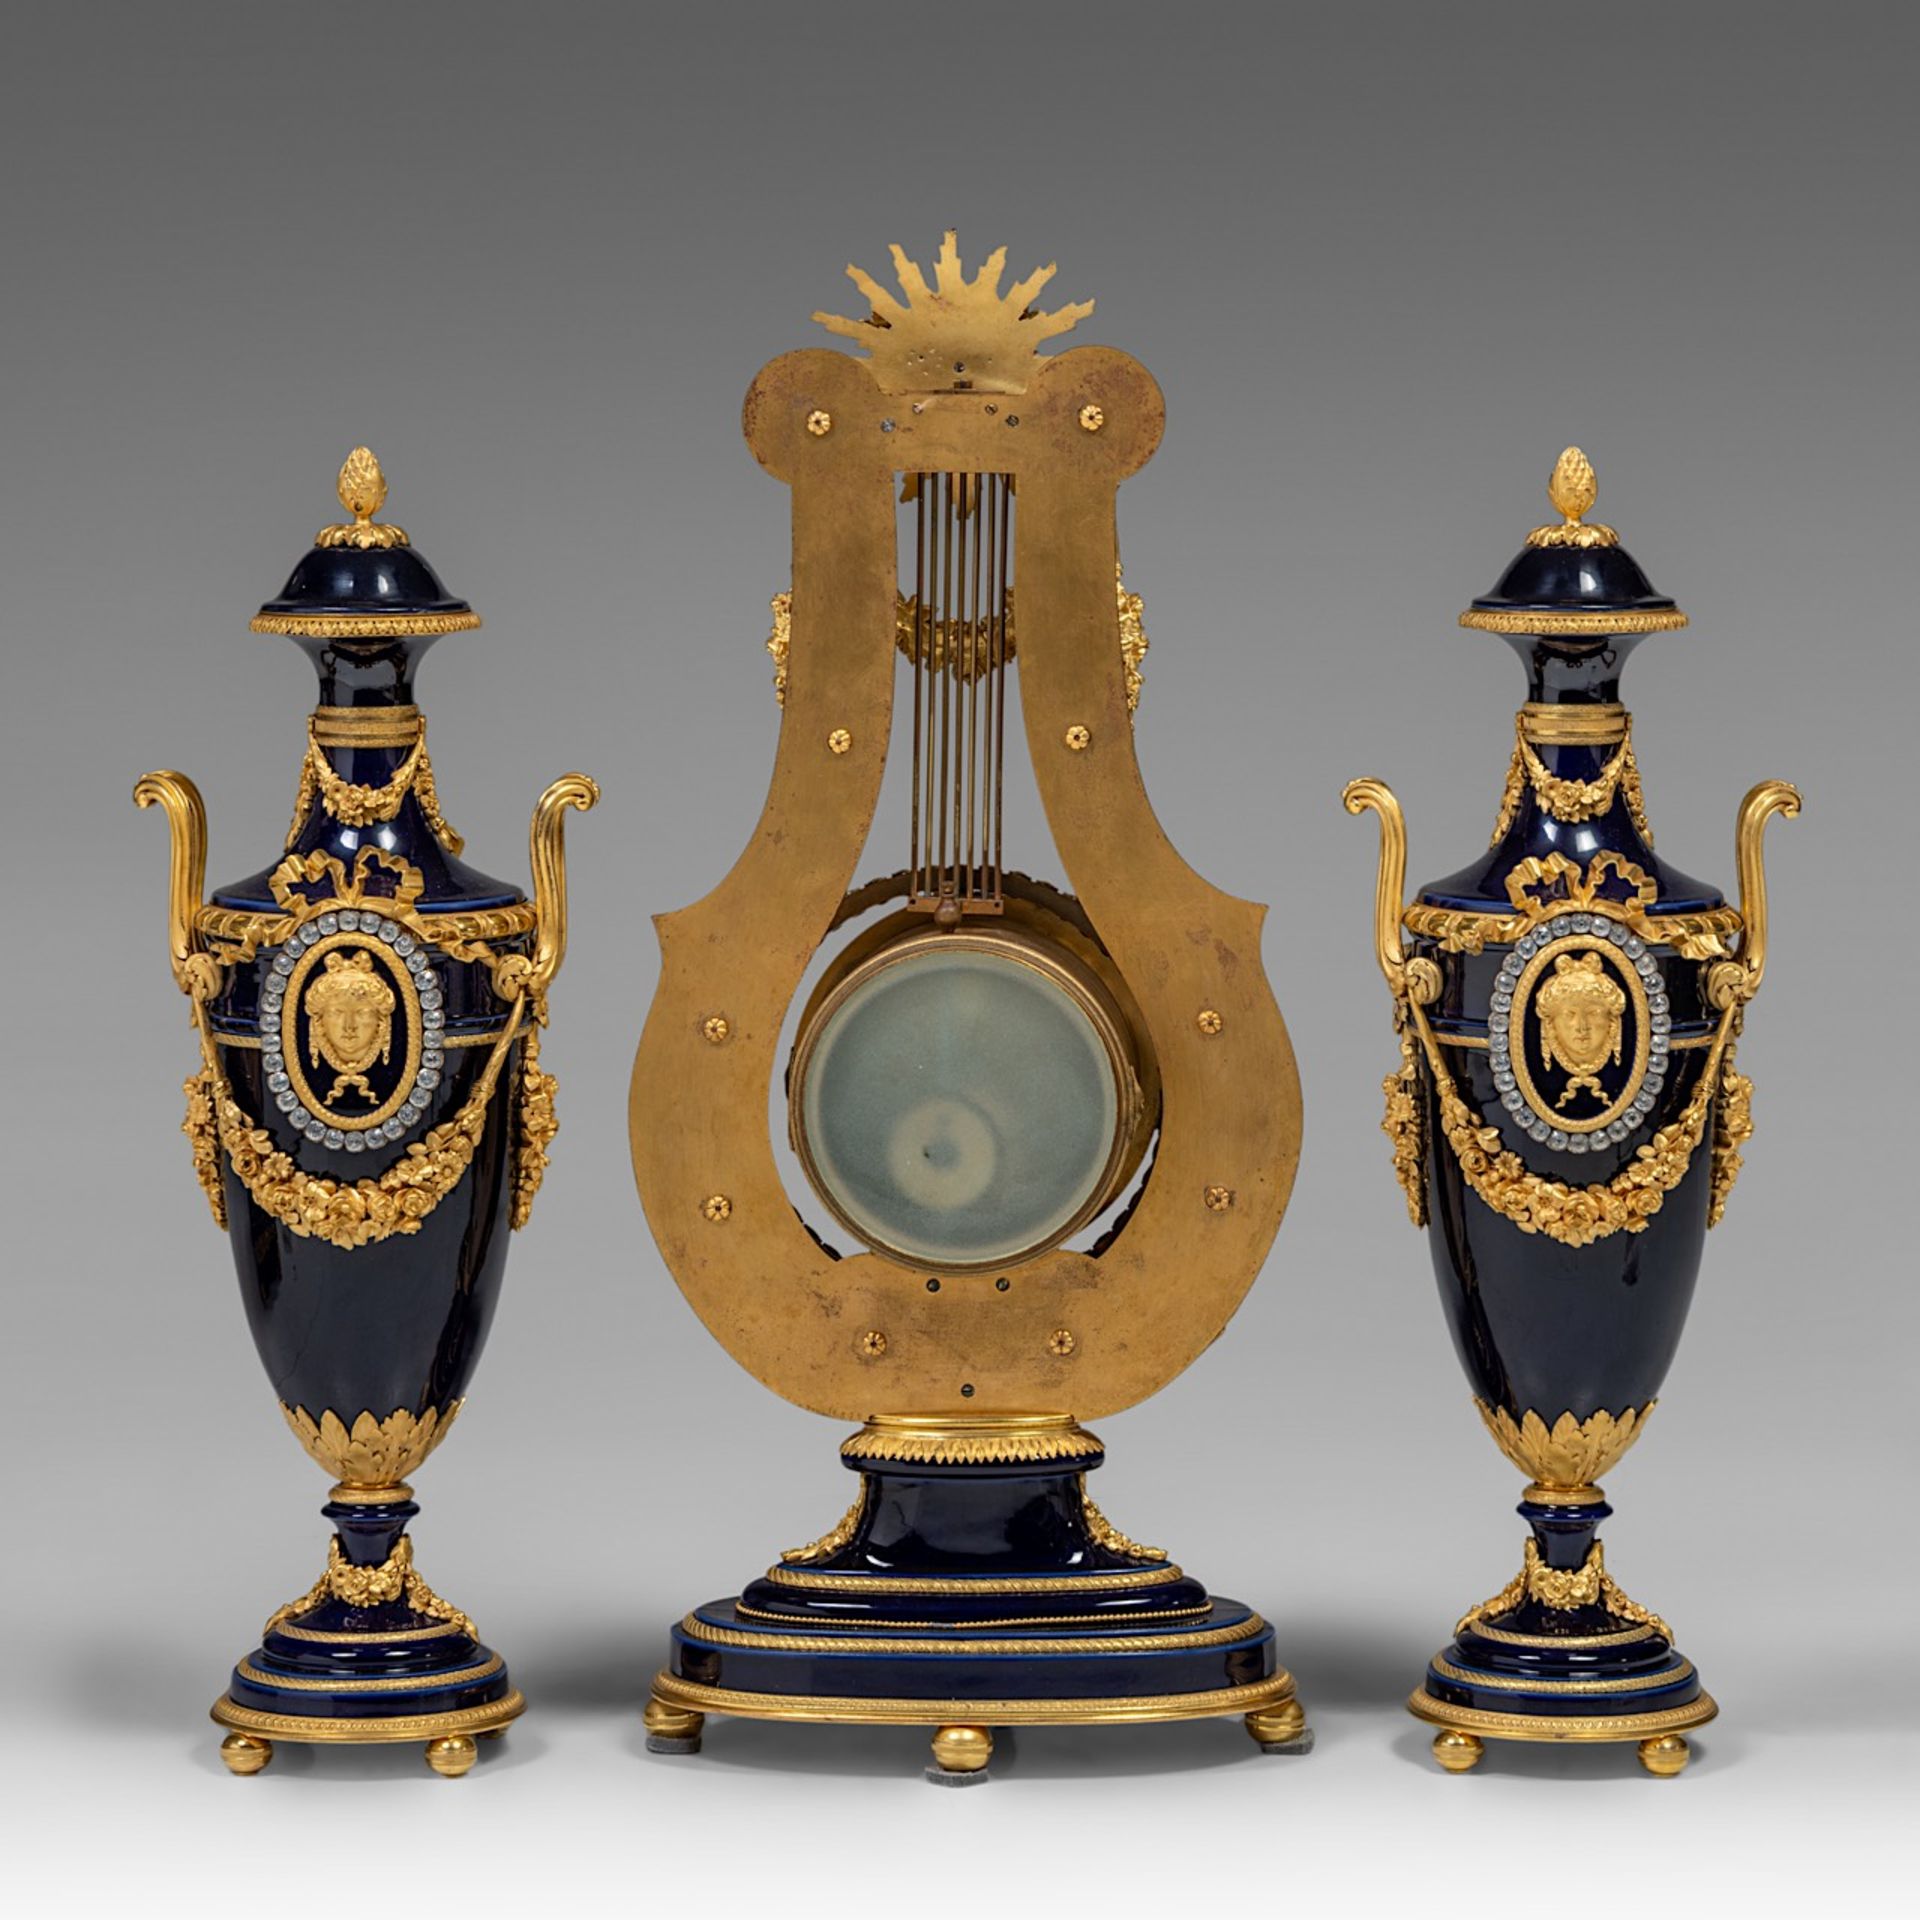 A fine Neoclassical three-piece cobalt blue porcelain and gilt bronze mounted clock set, H 55 - 65 c - Bild 3 aus 16